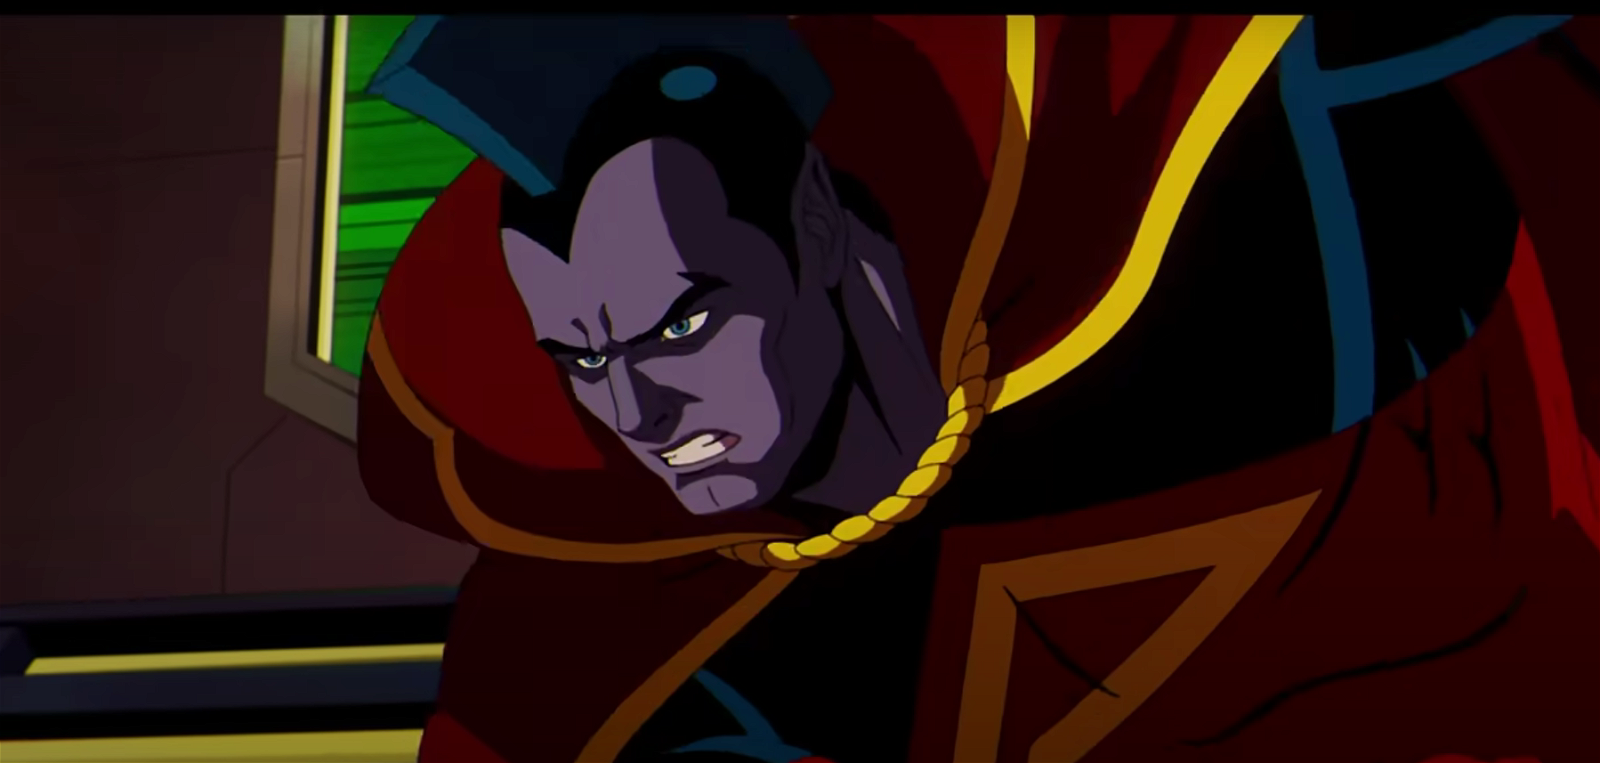 Gladiator, as he appears in X-Men '97